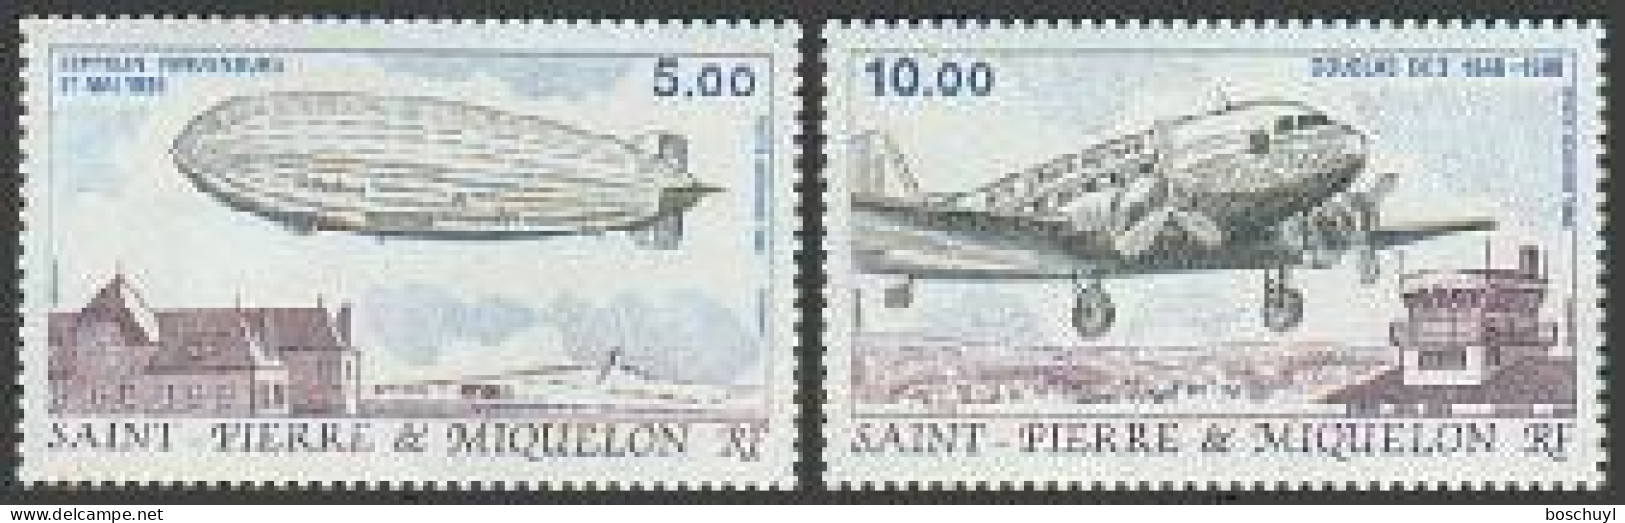 St Pierre And Miquelon, 1988, Zeppelin, Airplane, Aviation, MNH, Michel 559-560 - Neufs